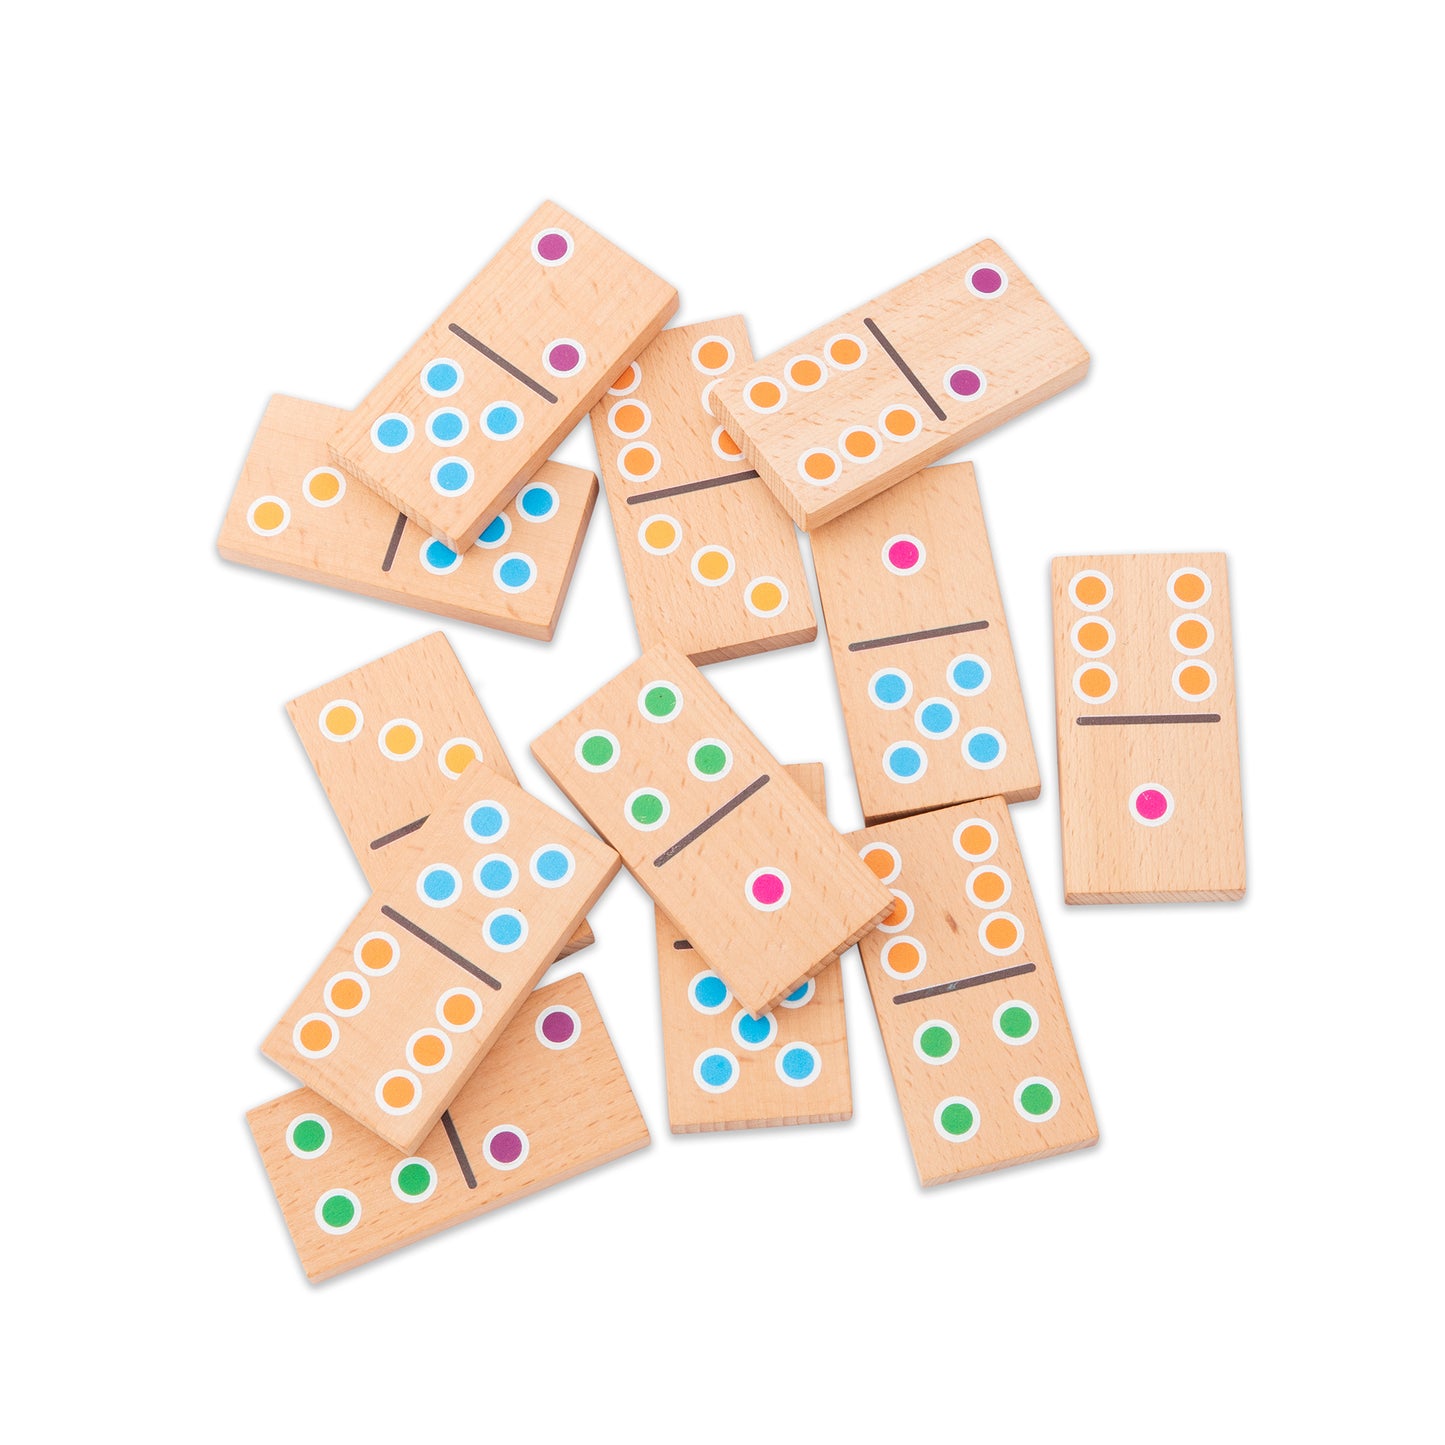 Wooden Dot Puzzle - Set of 12 Blocks